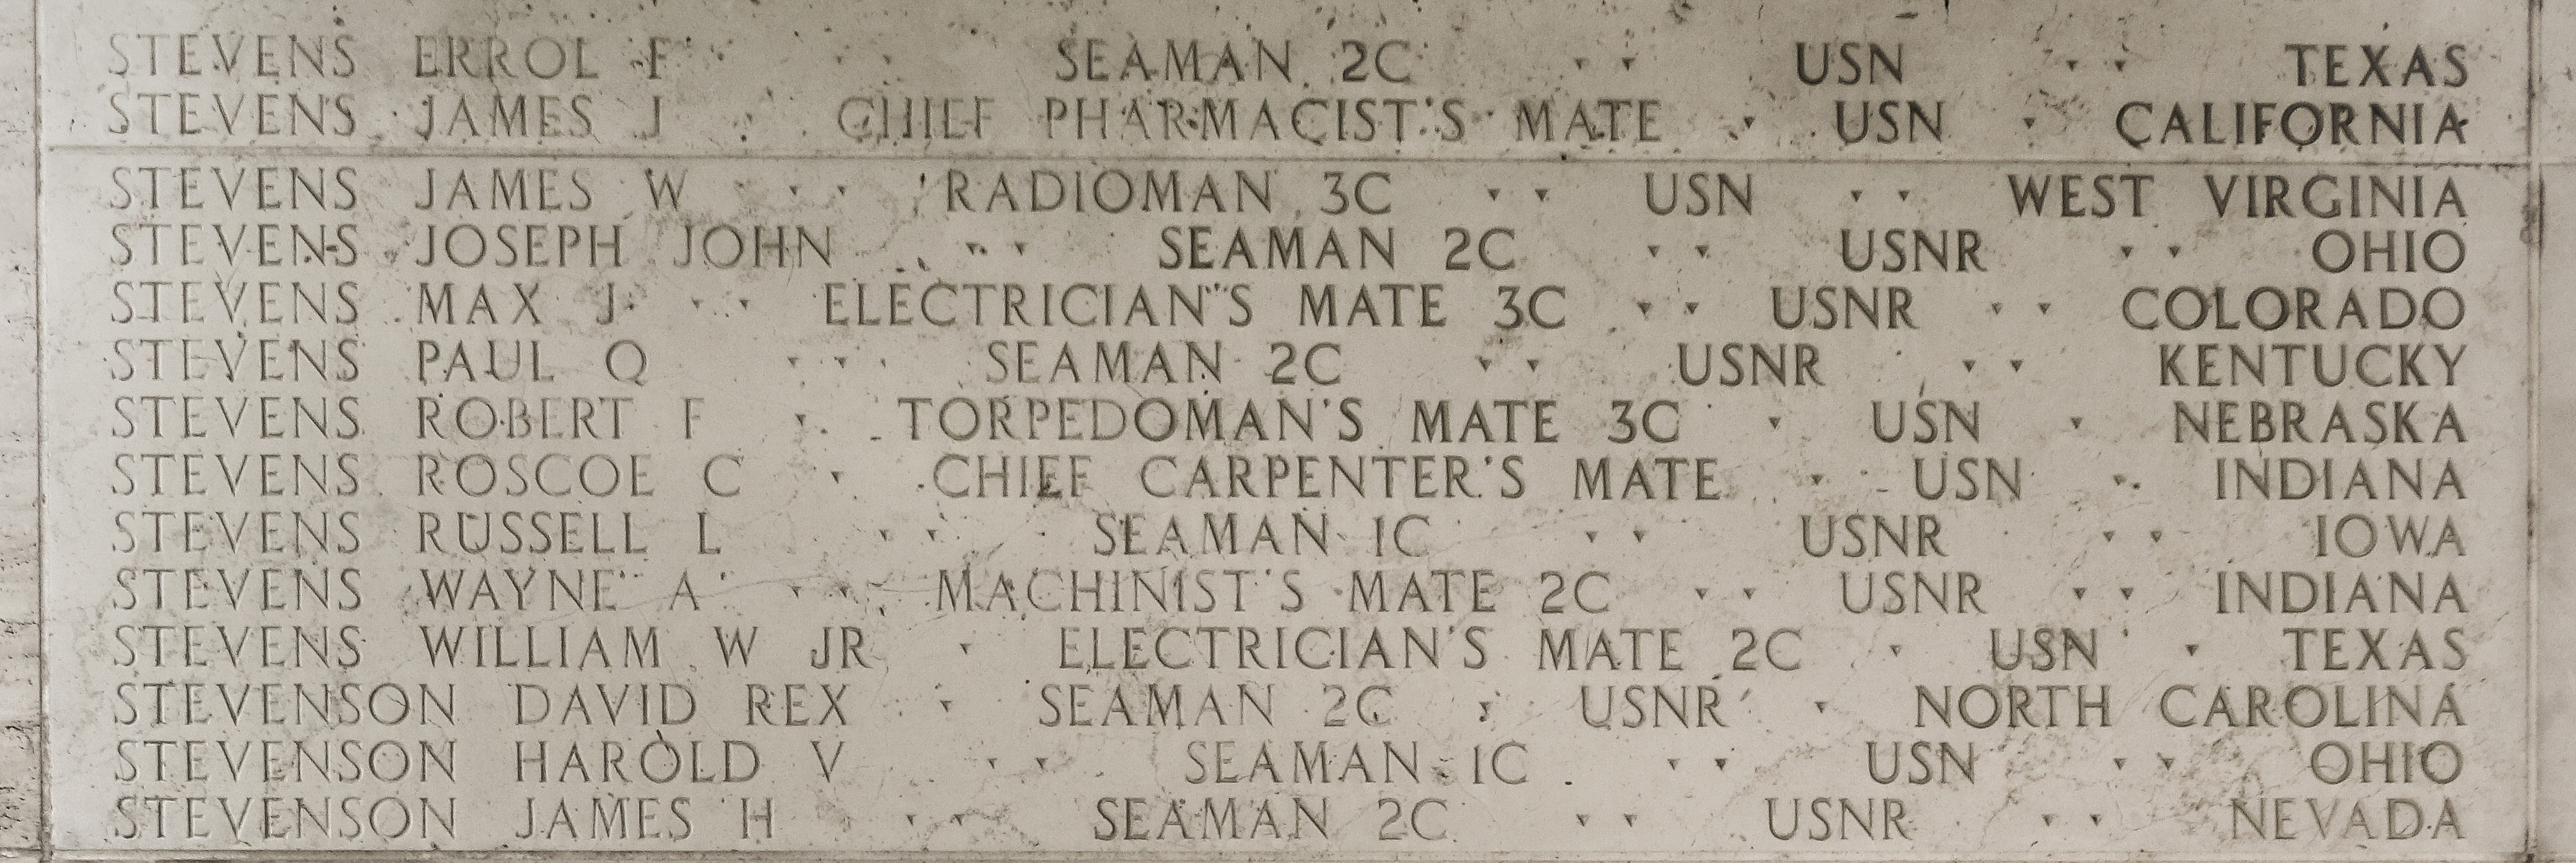 James H. Stevenson, Seaman Second Class